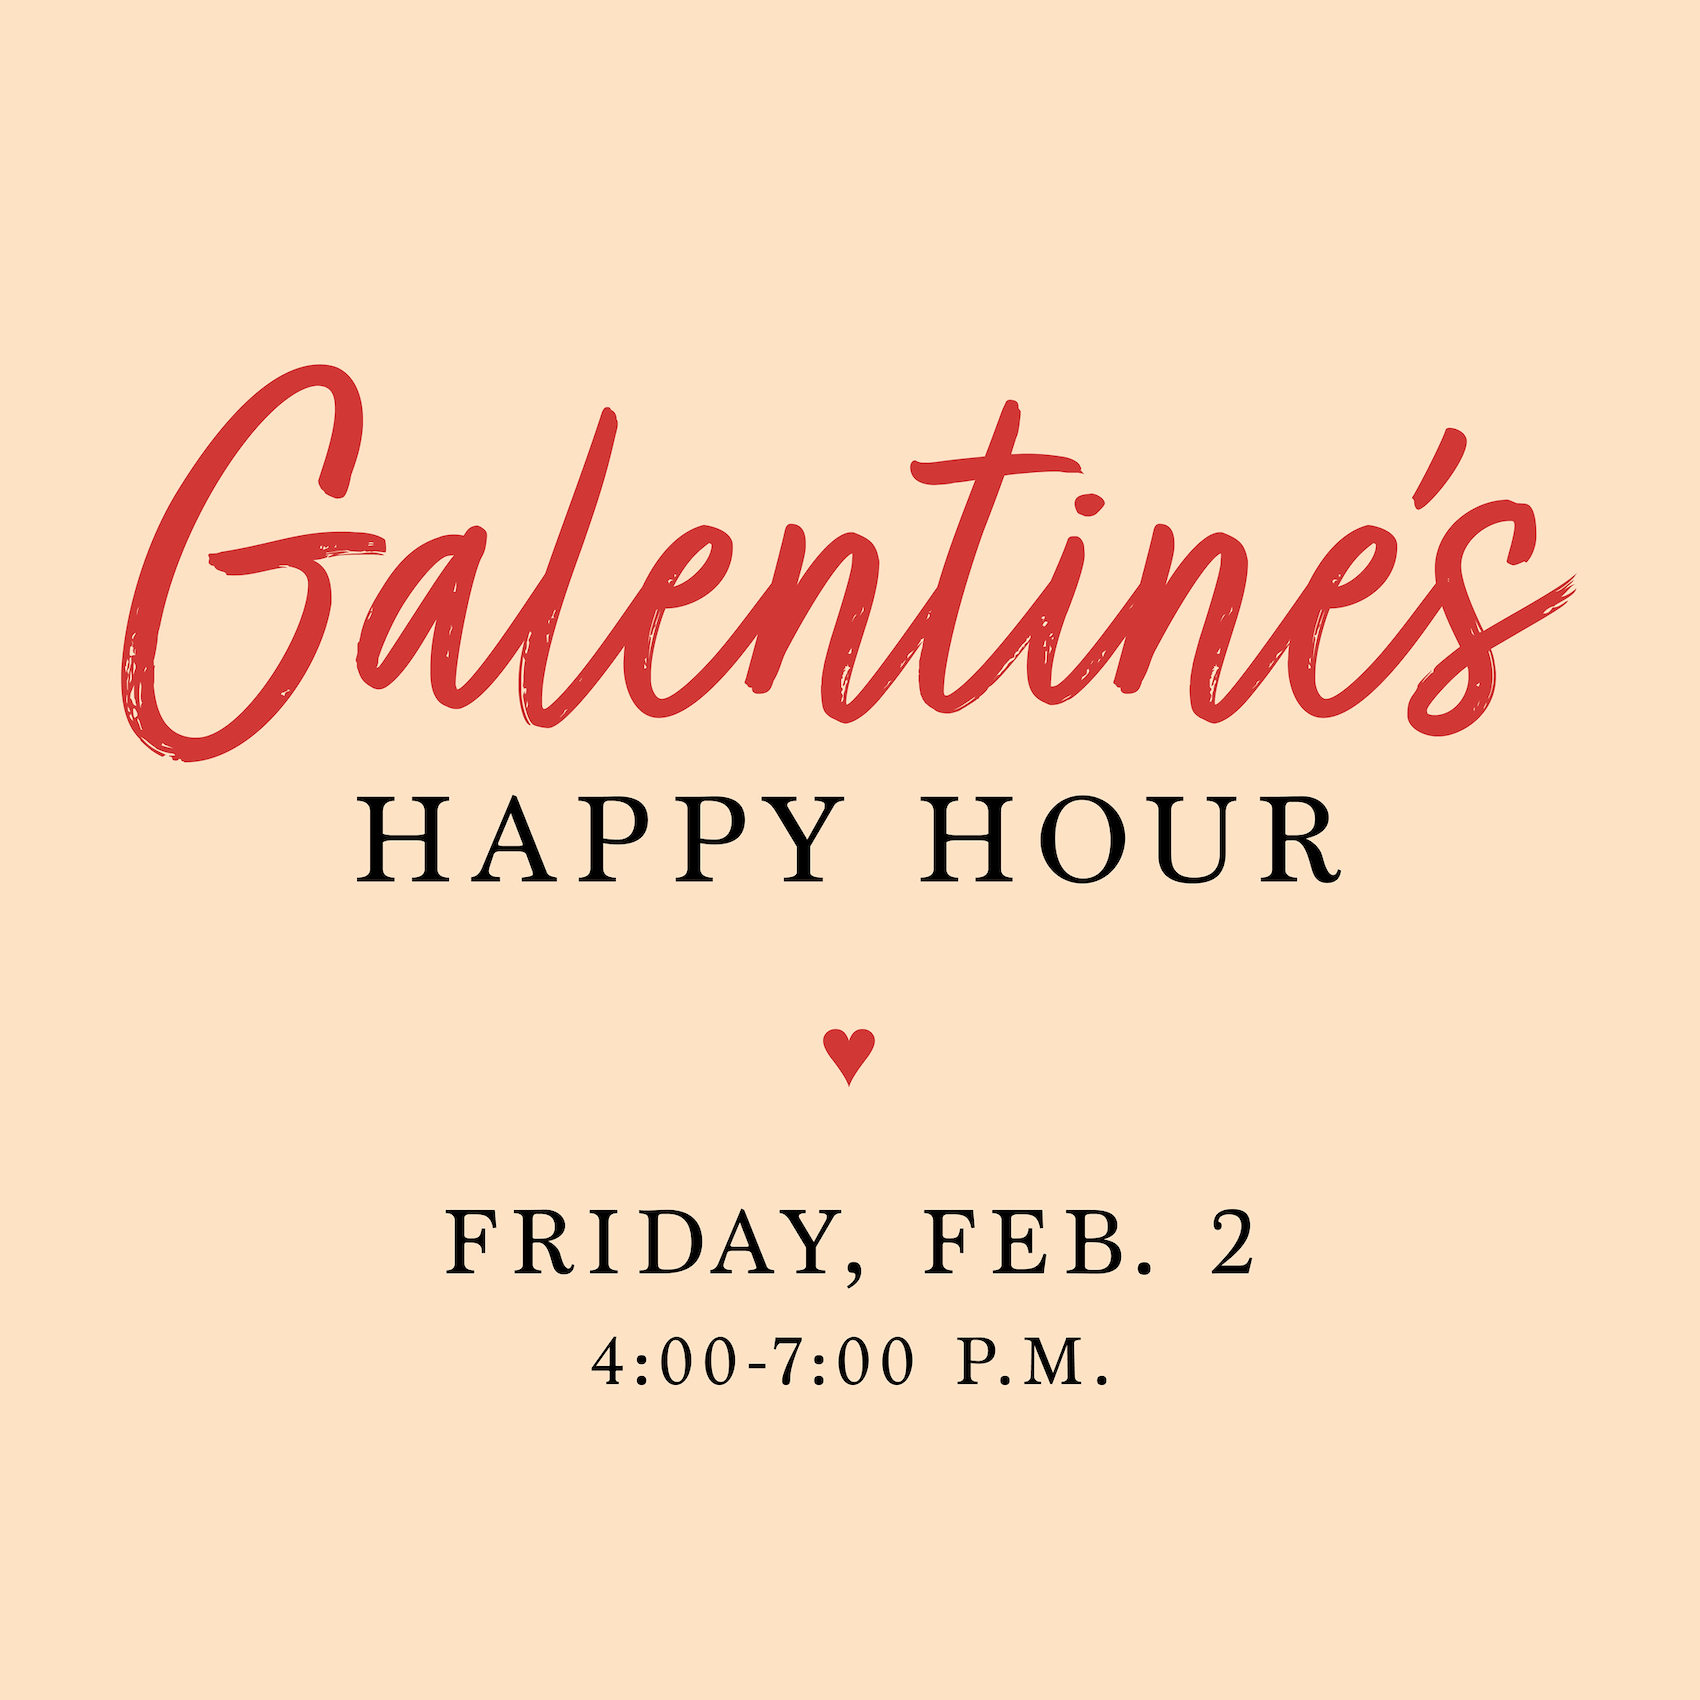 Galentine's Happy Hour